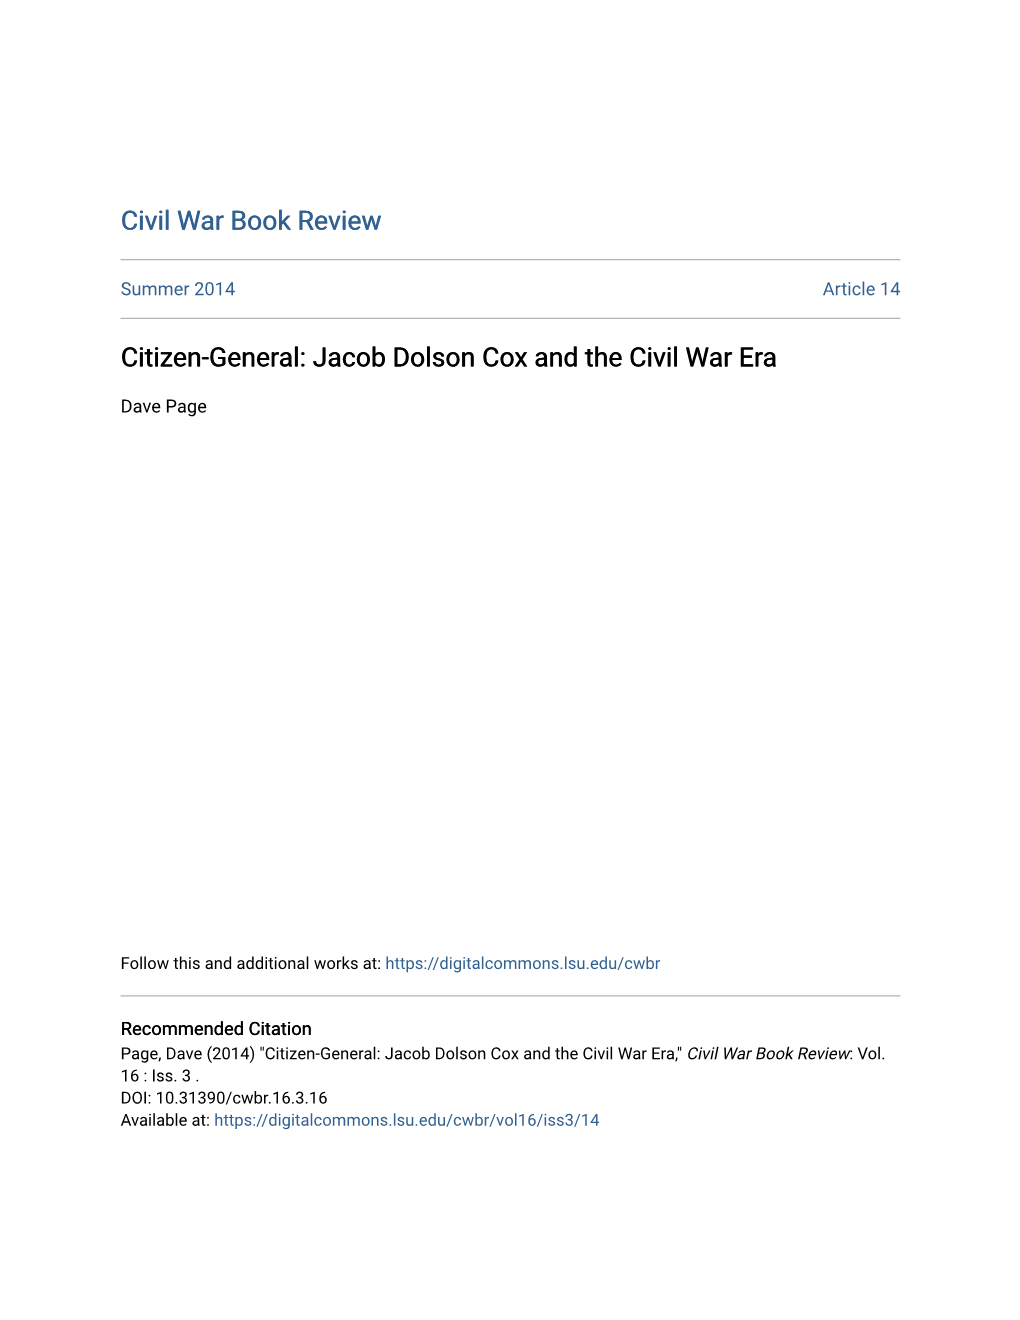 Jacob Dolson Cox and the Civil War Era